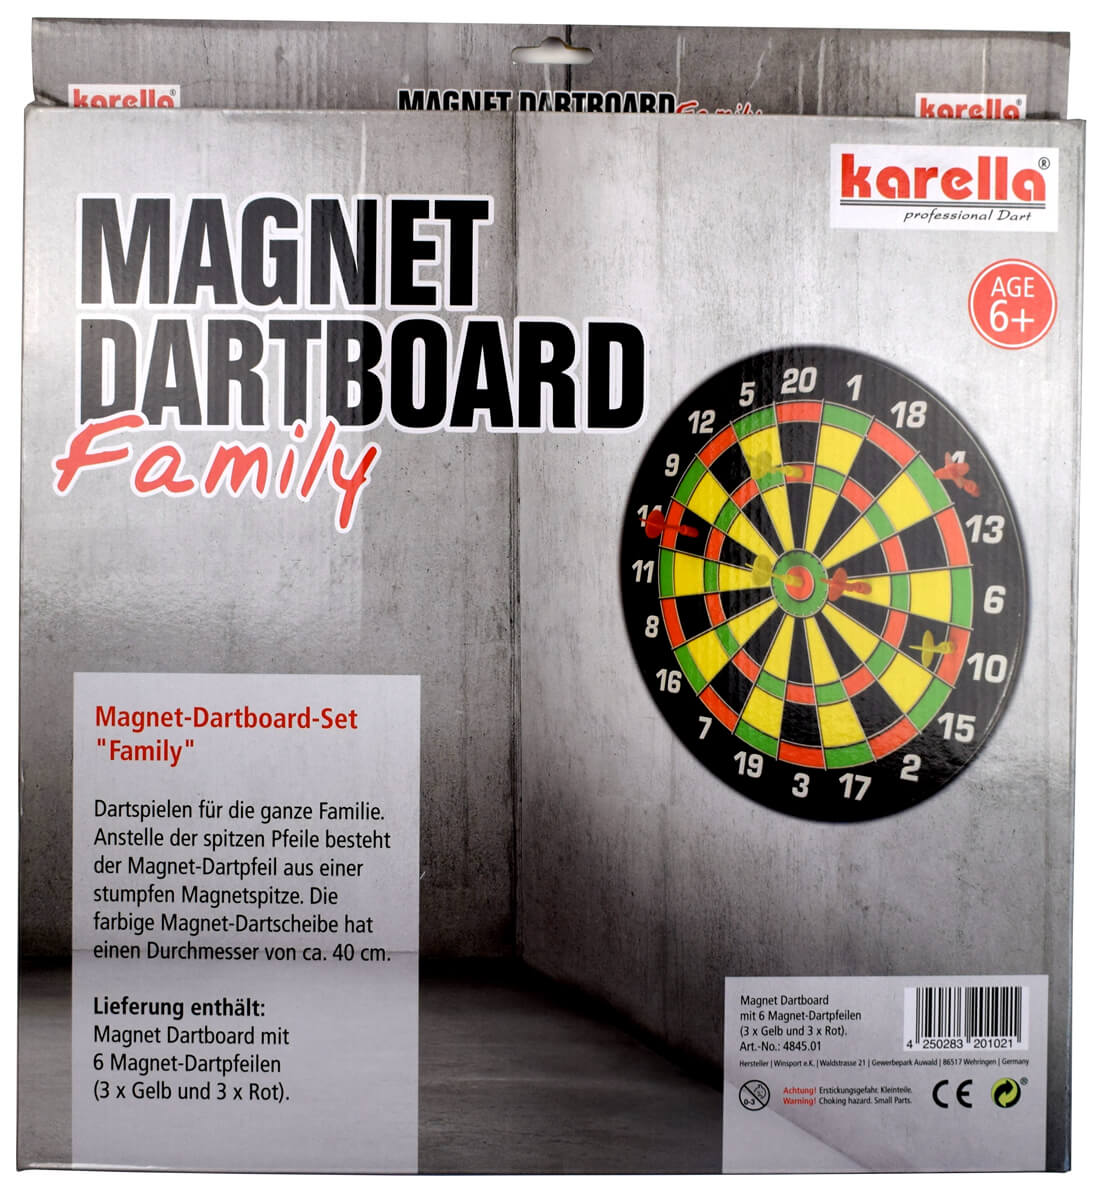 Family Karella Magnet-Dartboard-Set